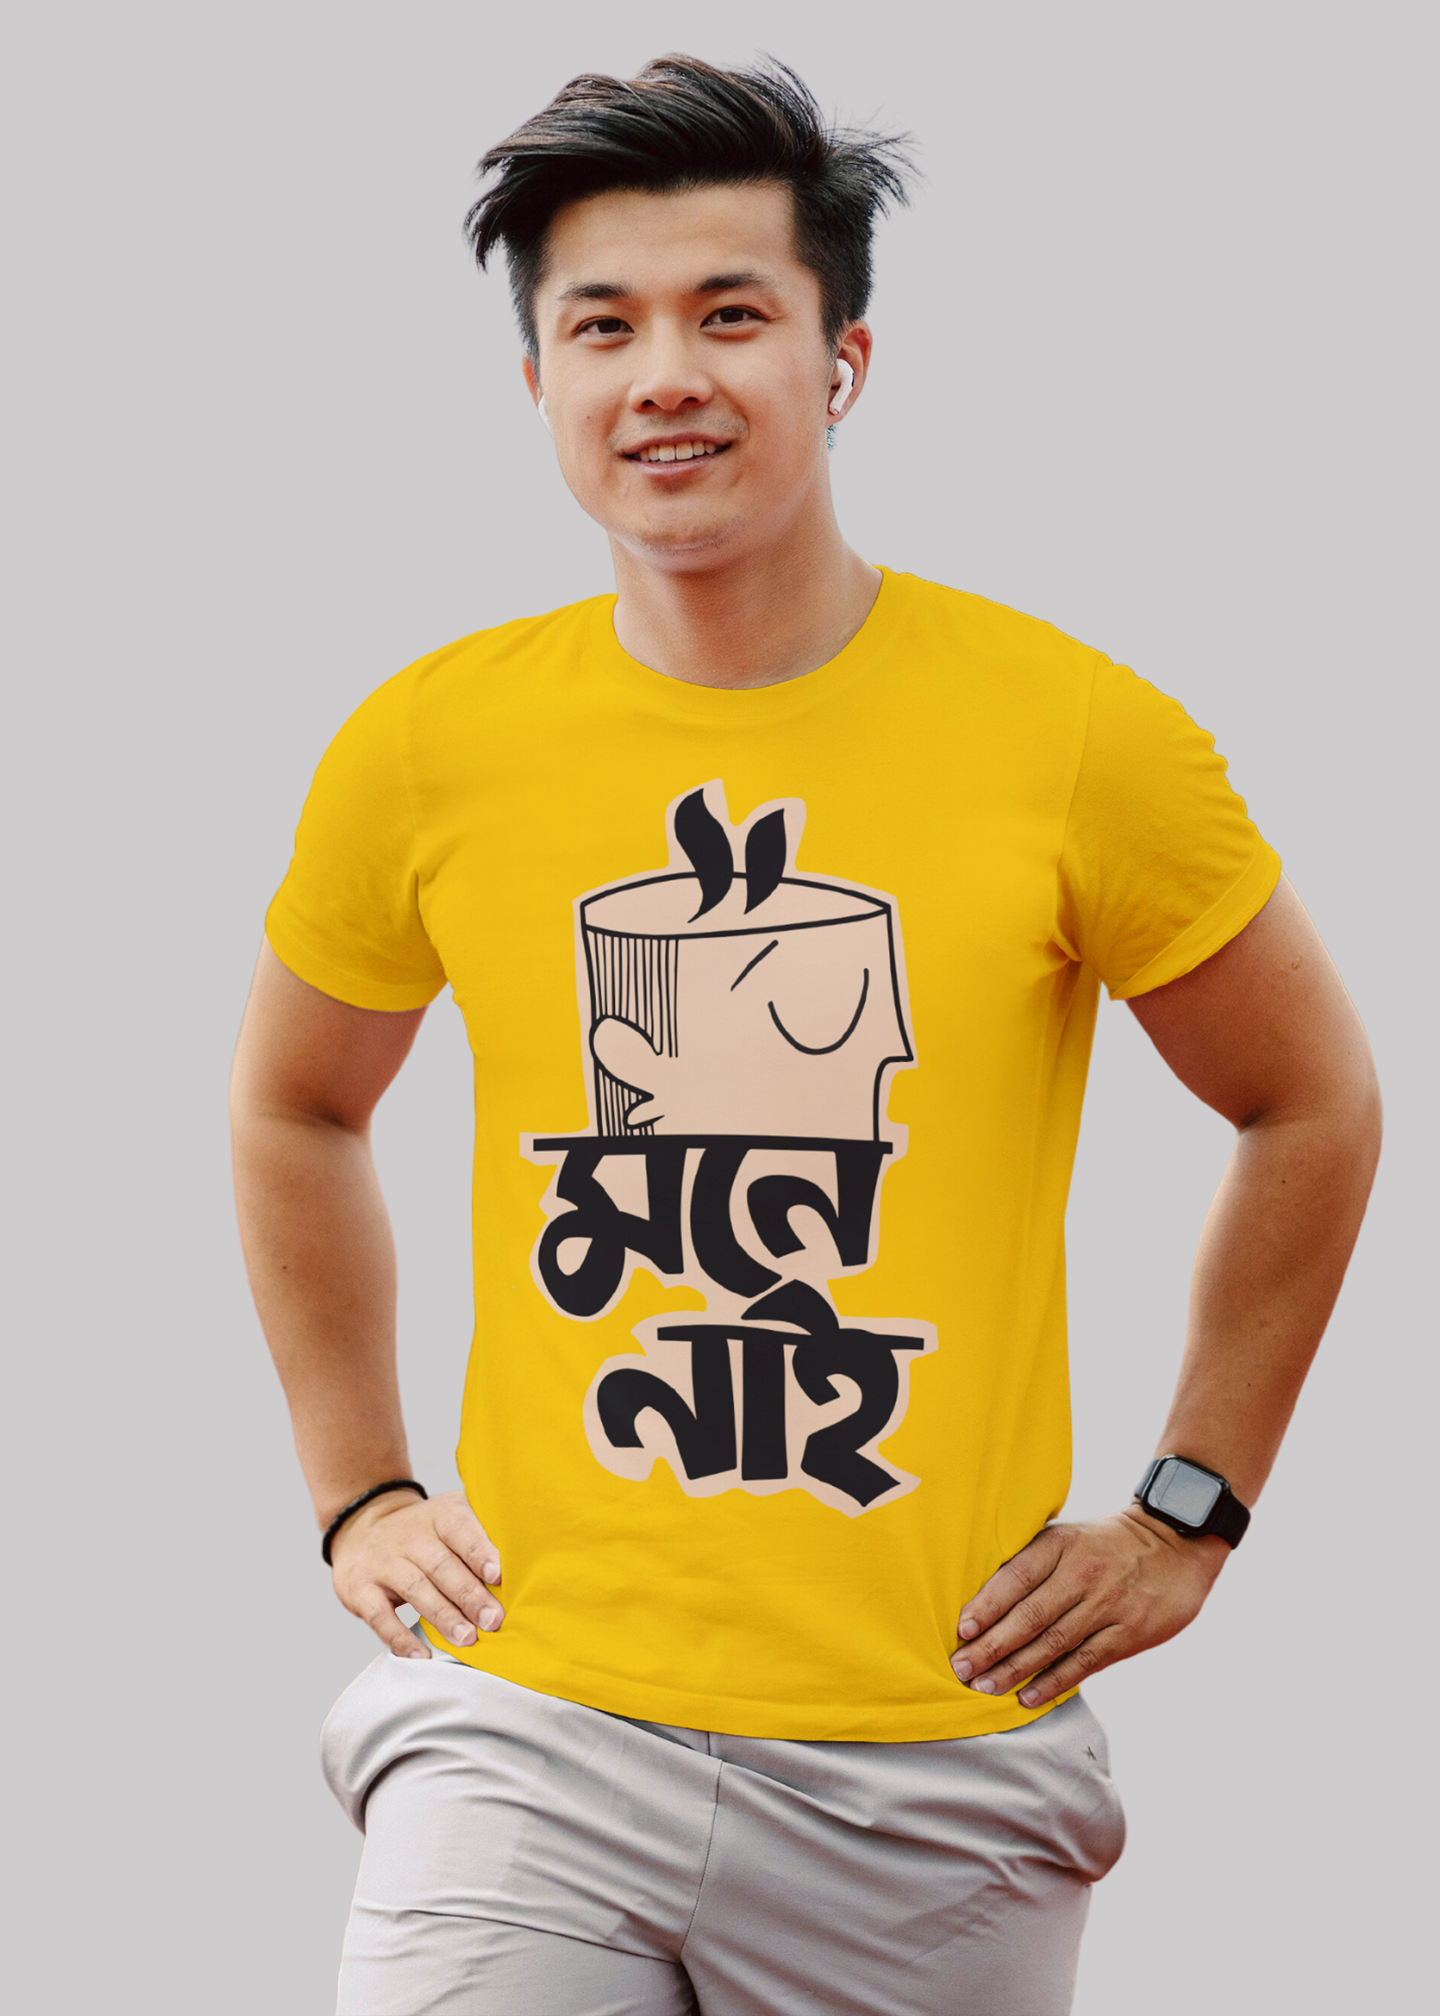 Mone nei bengali caligraphy Printed Half Sleeve Premium Cotton T-shirt For Men